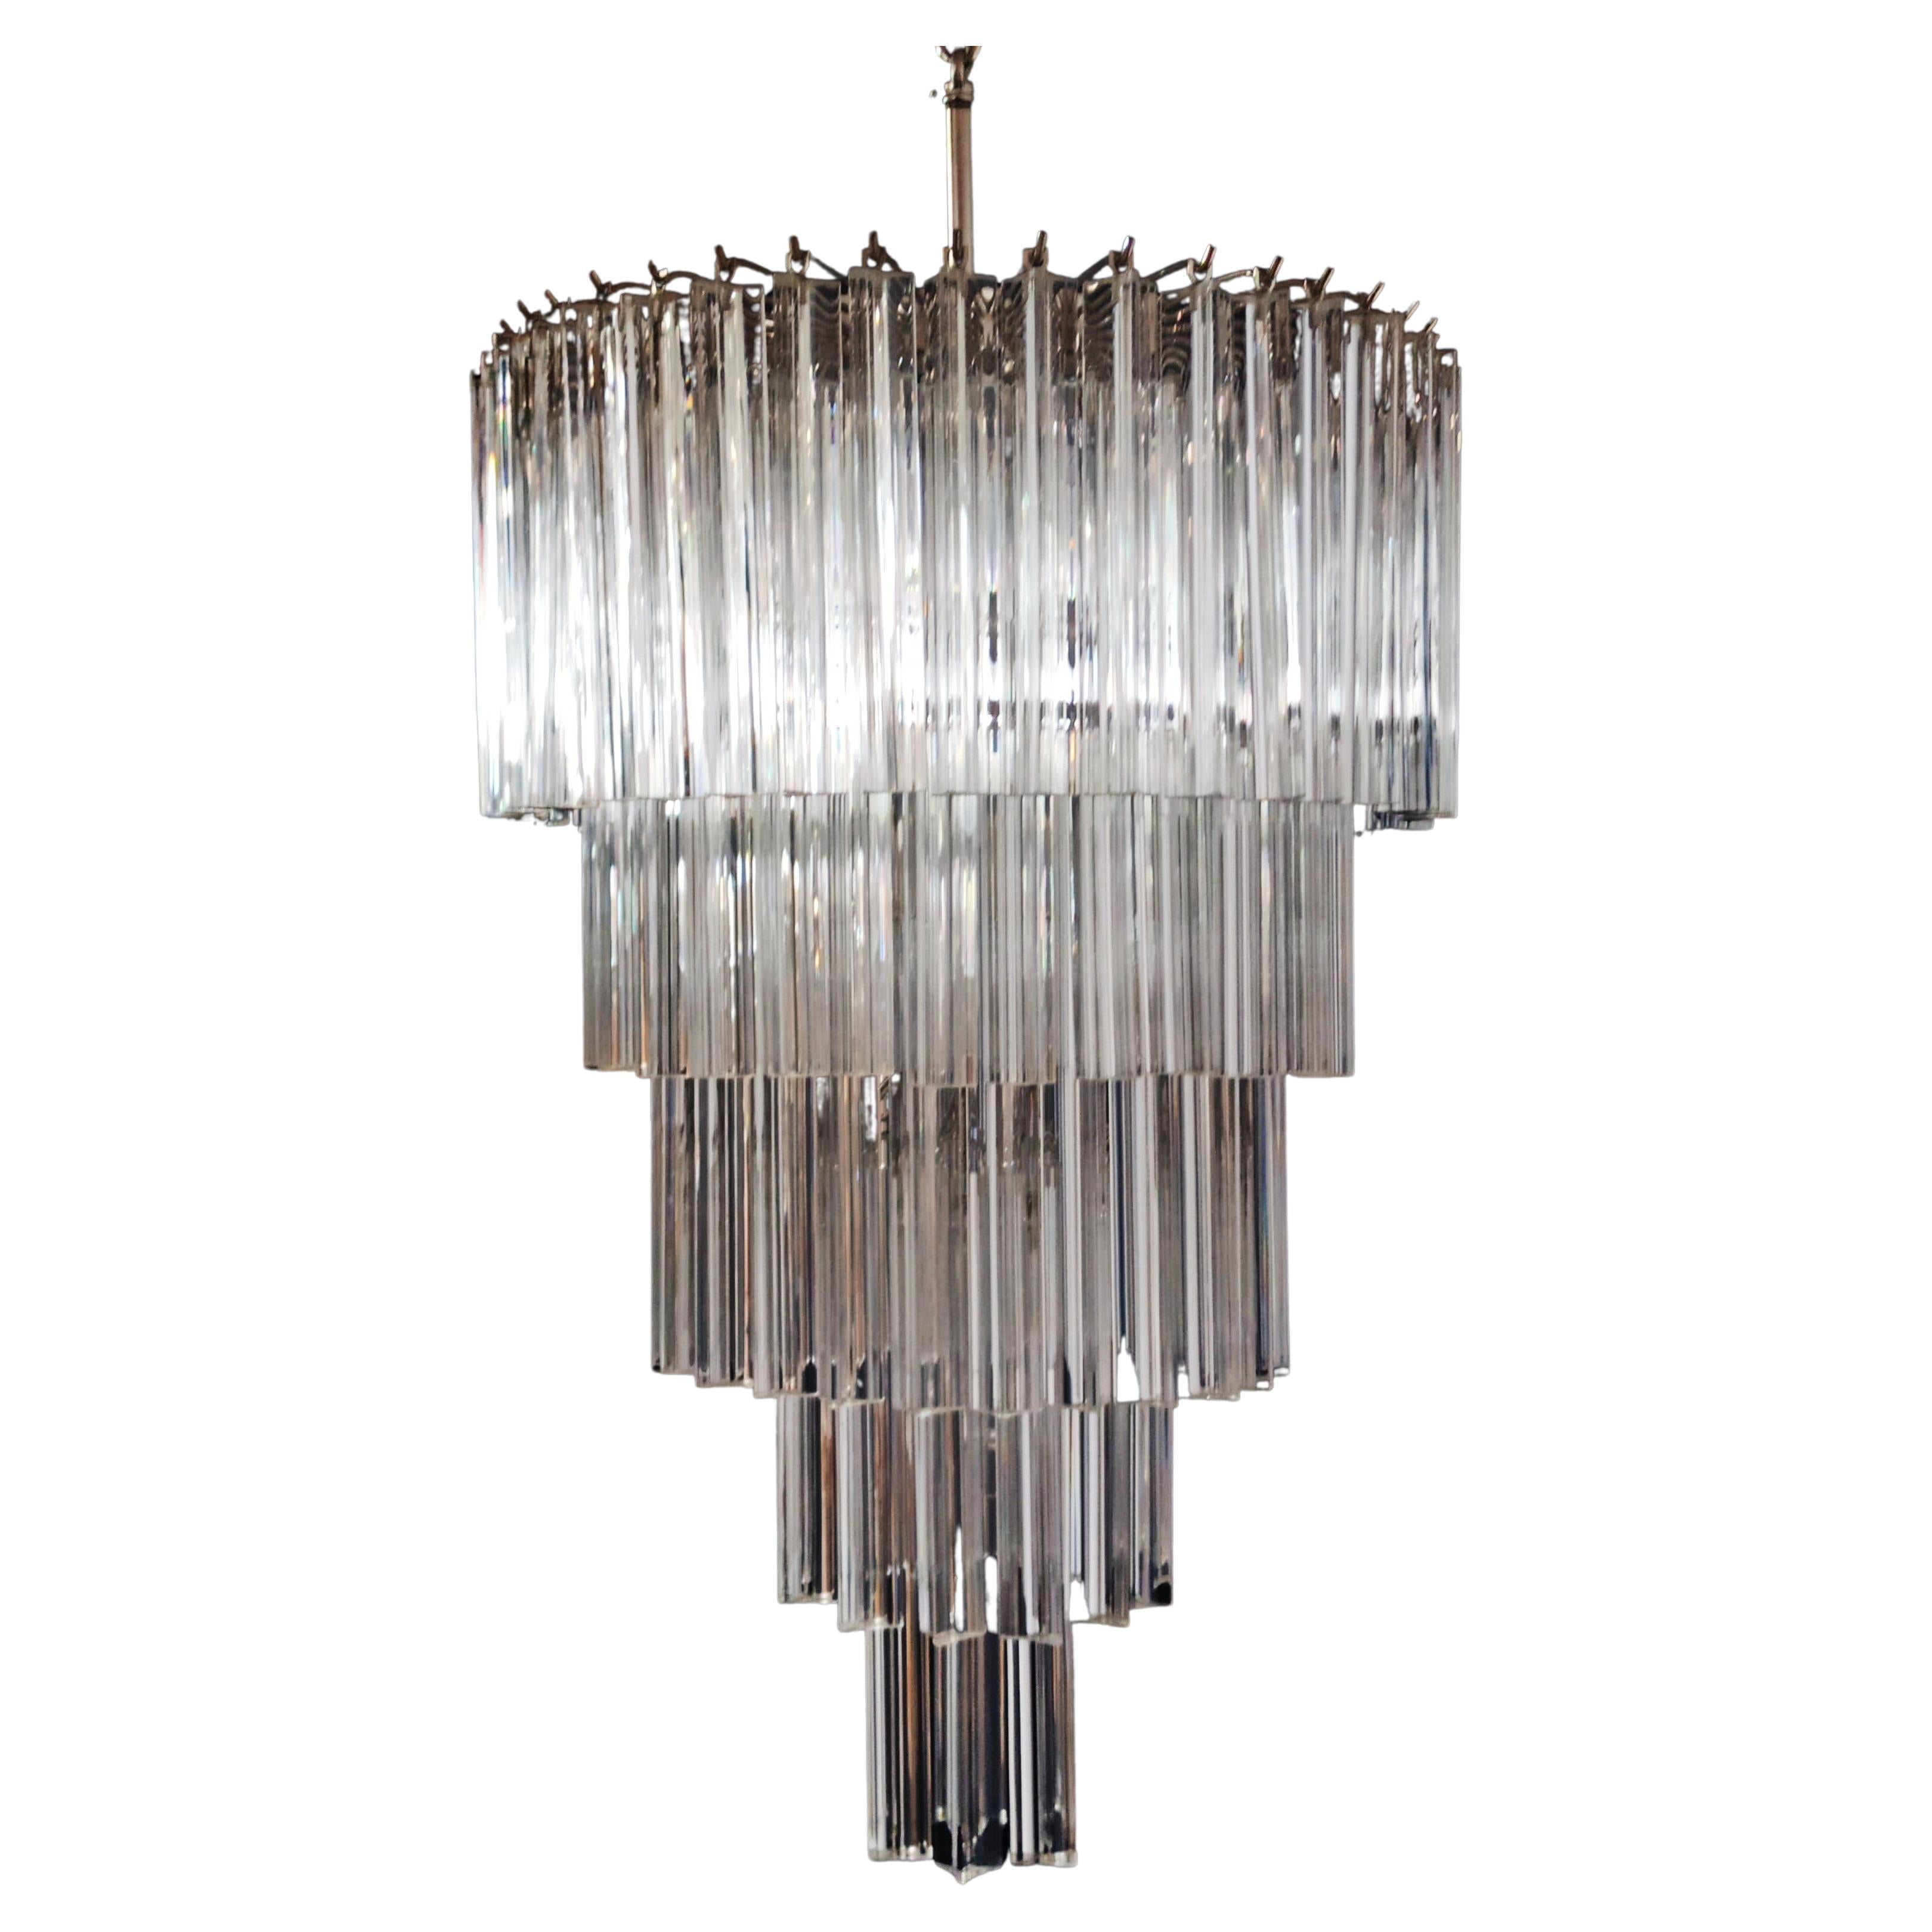 Beautiful Murano glass chandelier - 111 transparent triedri For Sale